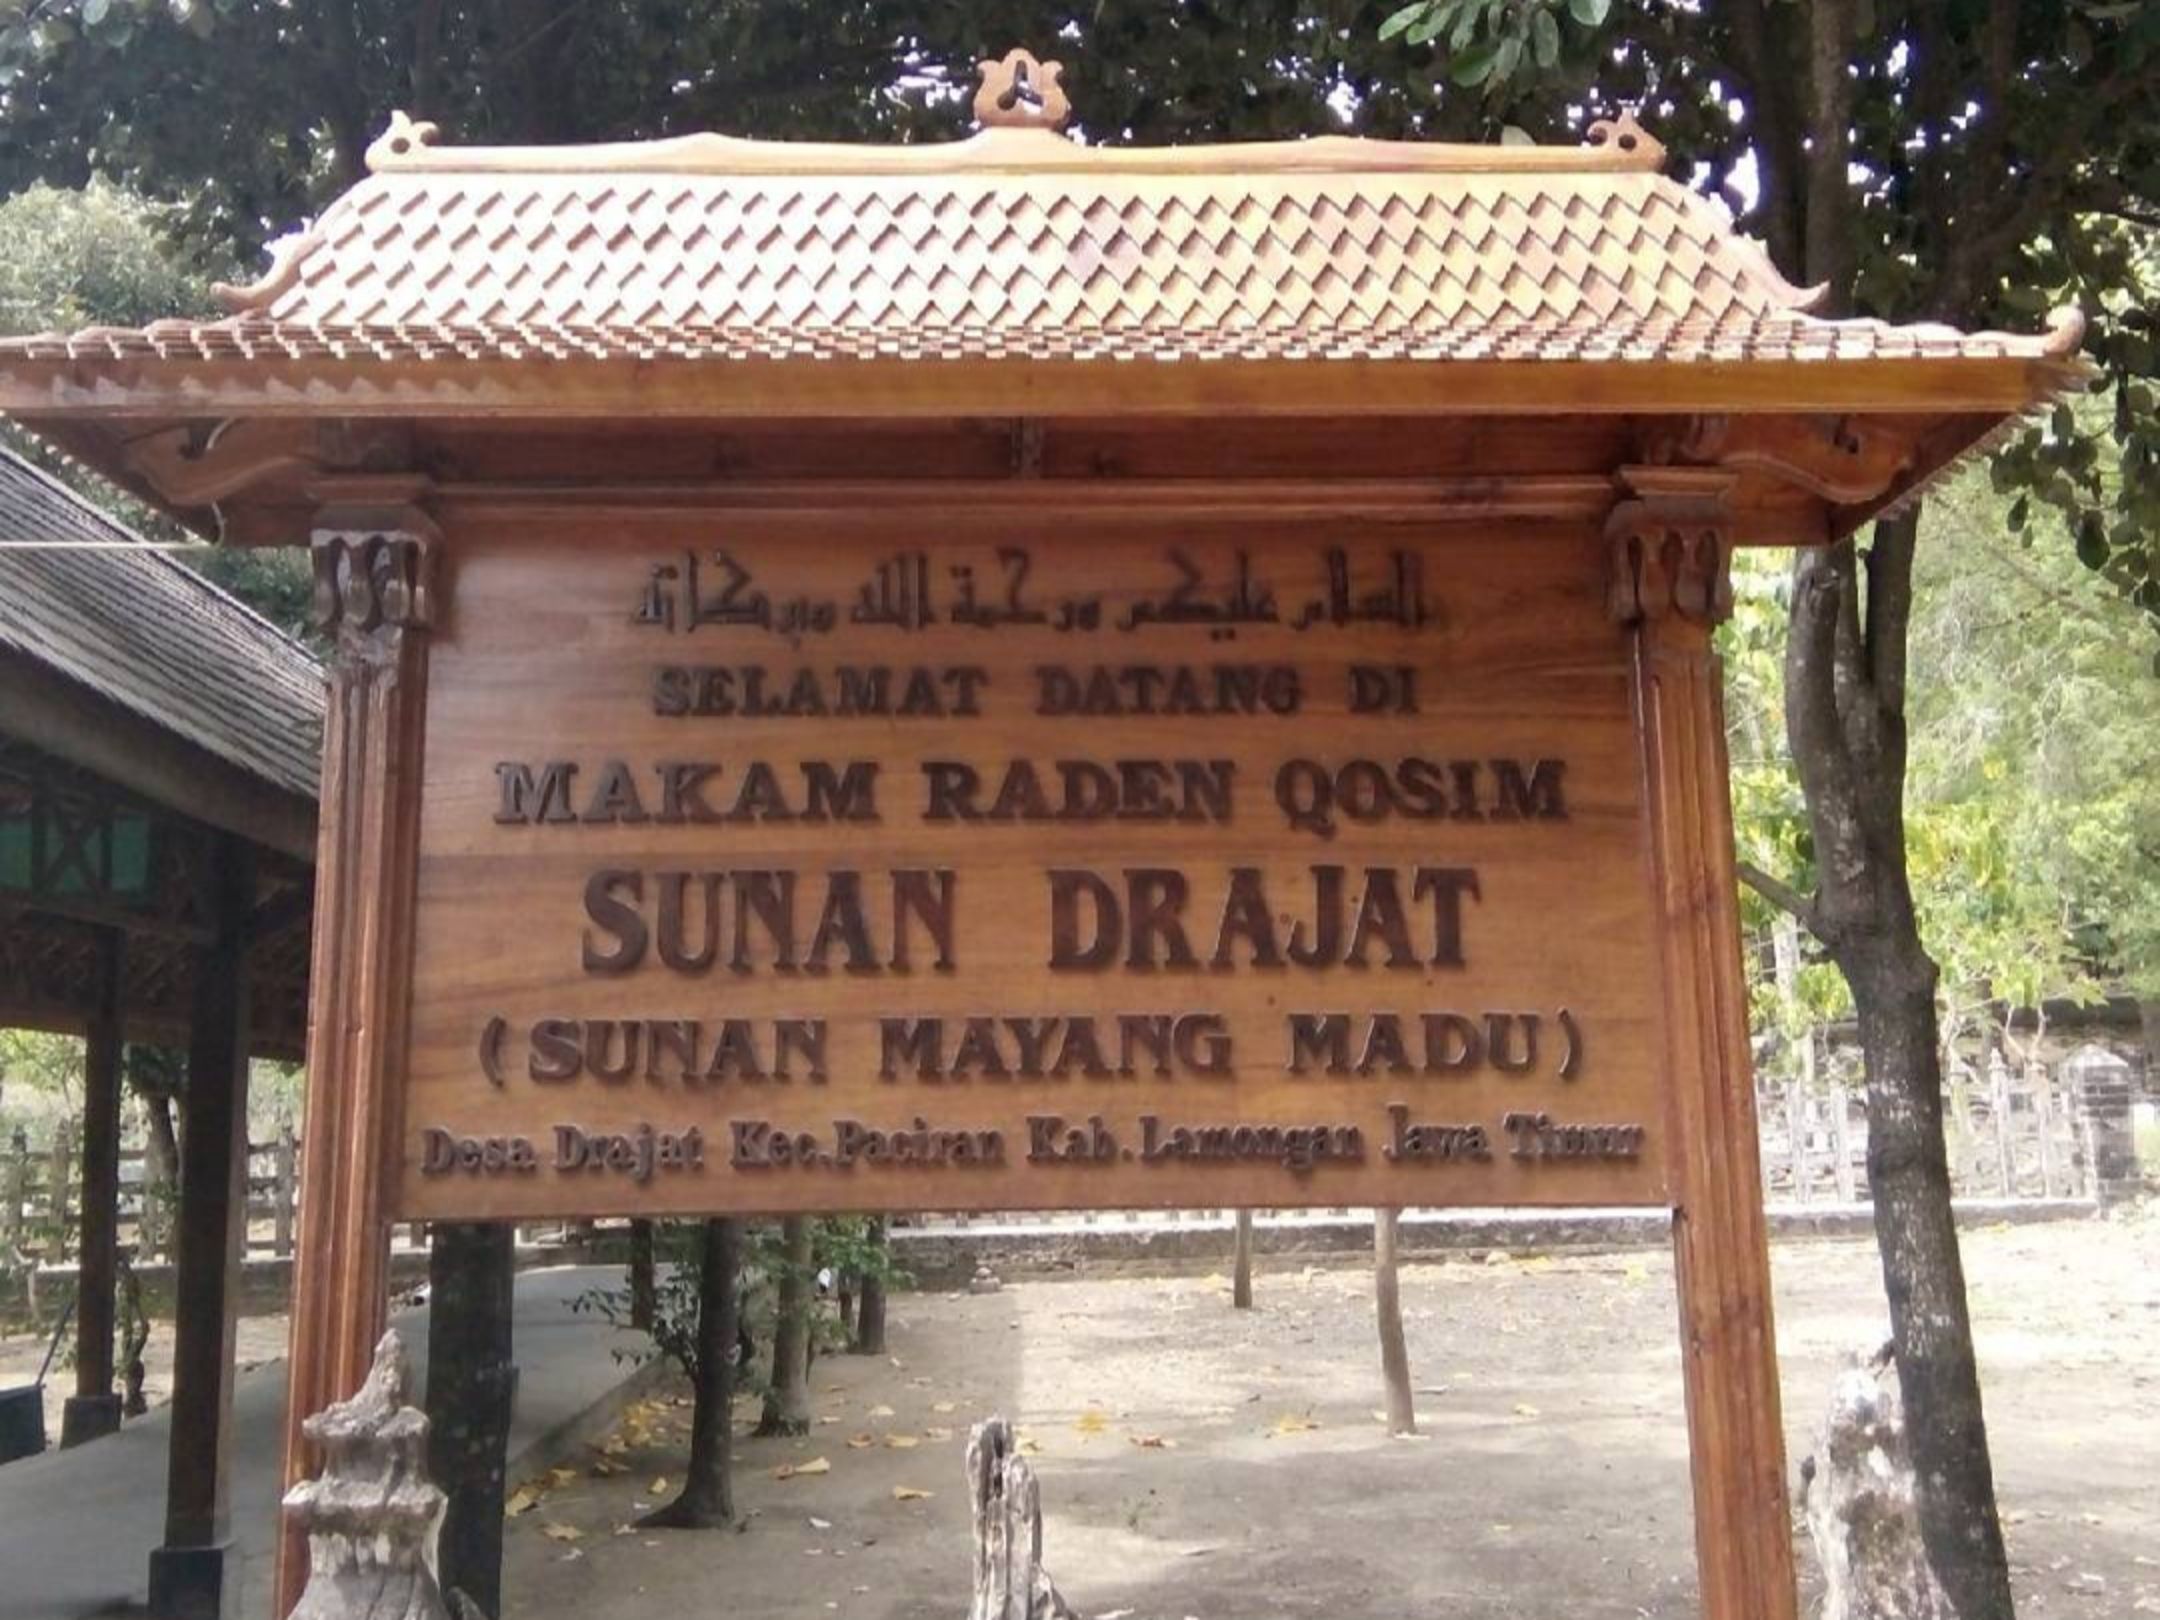 Lihat foto komplek makam Sunan Drajat terletak di sebuah bukit di Desa Drajat, Kecamatan Paciran, Kabupaten Lamongan, Provinsi Jawa Timur